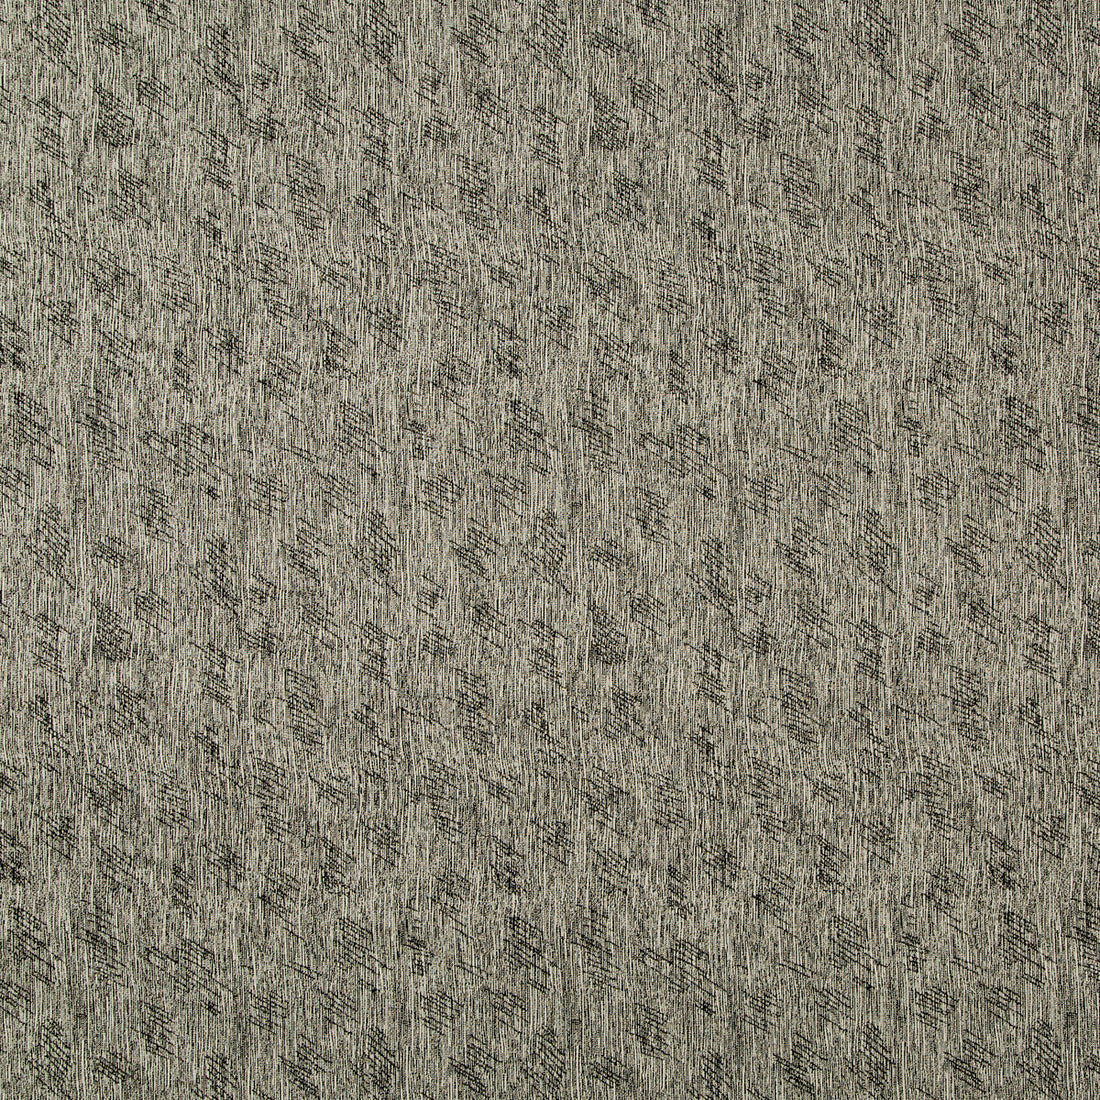 Lj Grw fabric - pattern 2019143.18.0 - by Lee Jofa Modern in the Kw Terra Firma III Indoor Outdoor collection